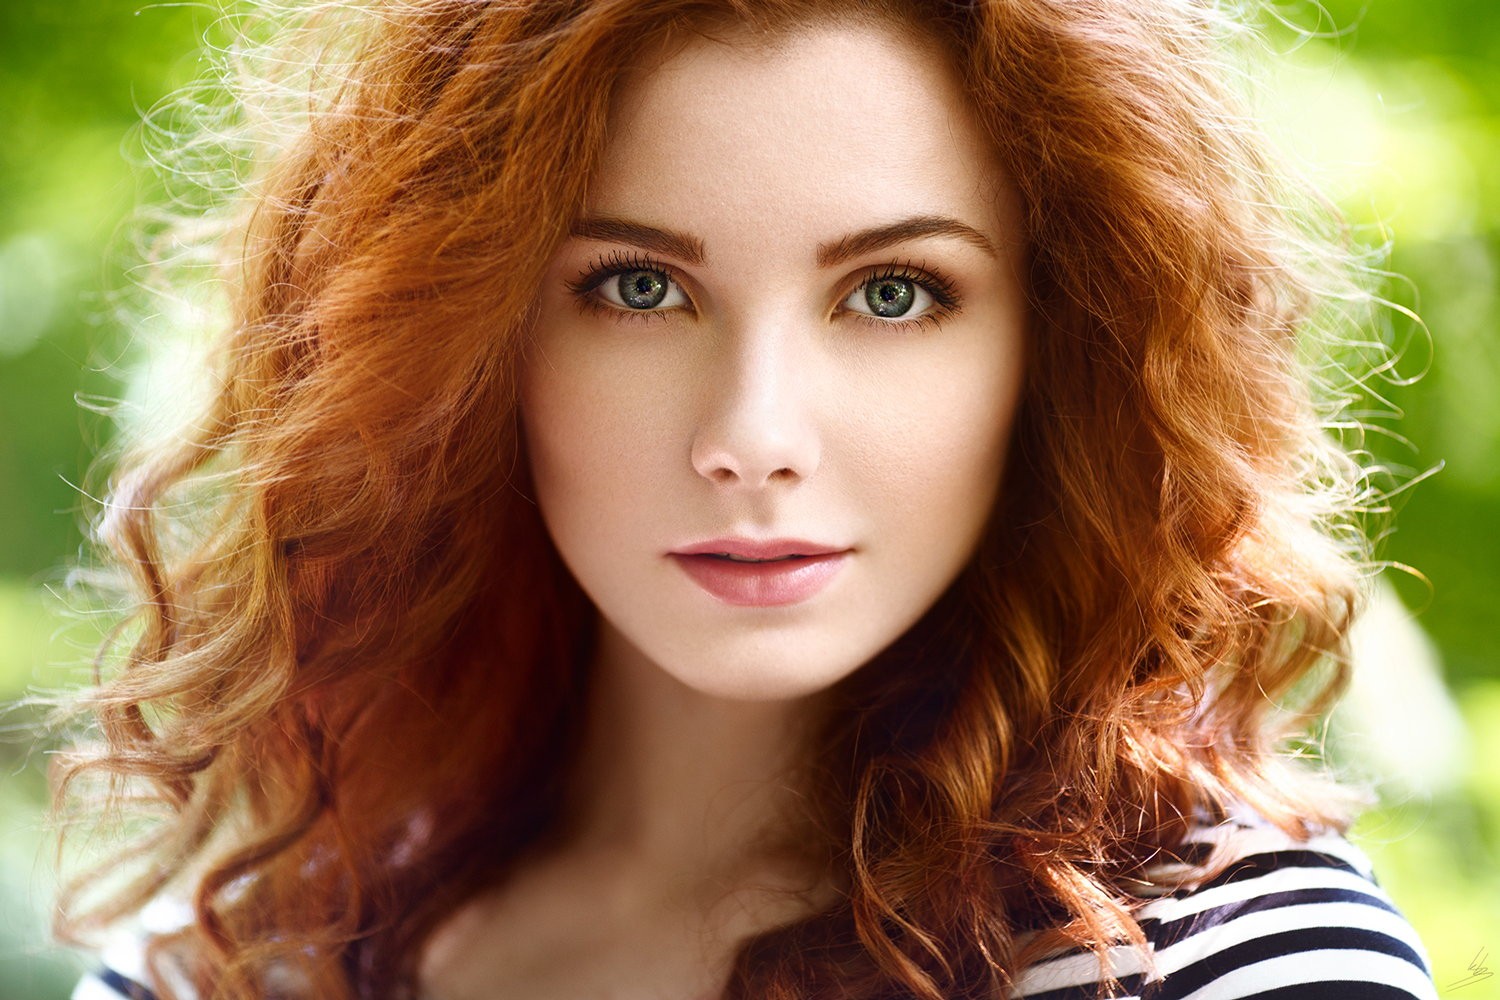 Women Outdoors Redhead Blurred Curly Hair Face Wallpaper Girls